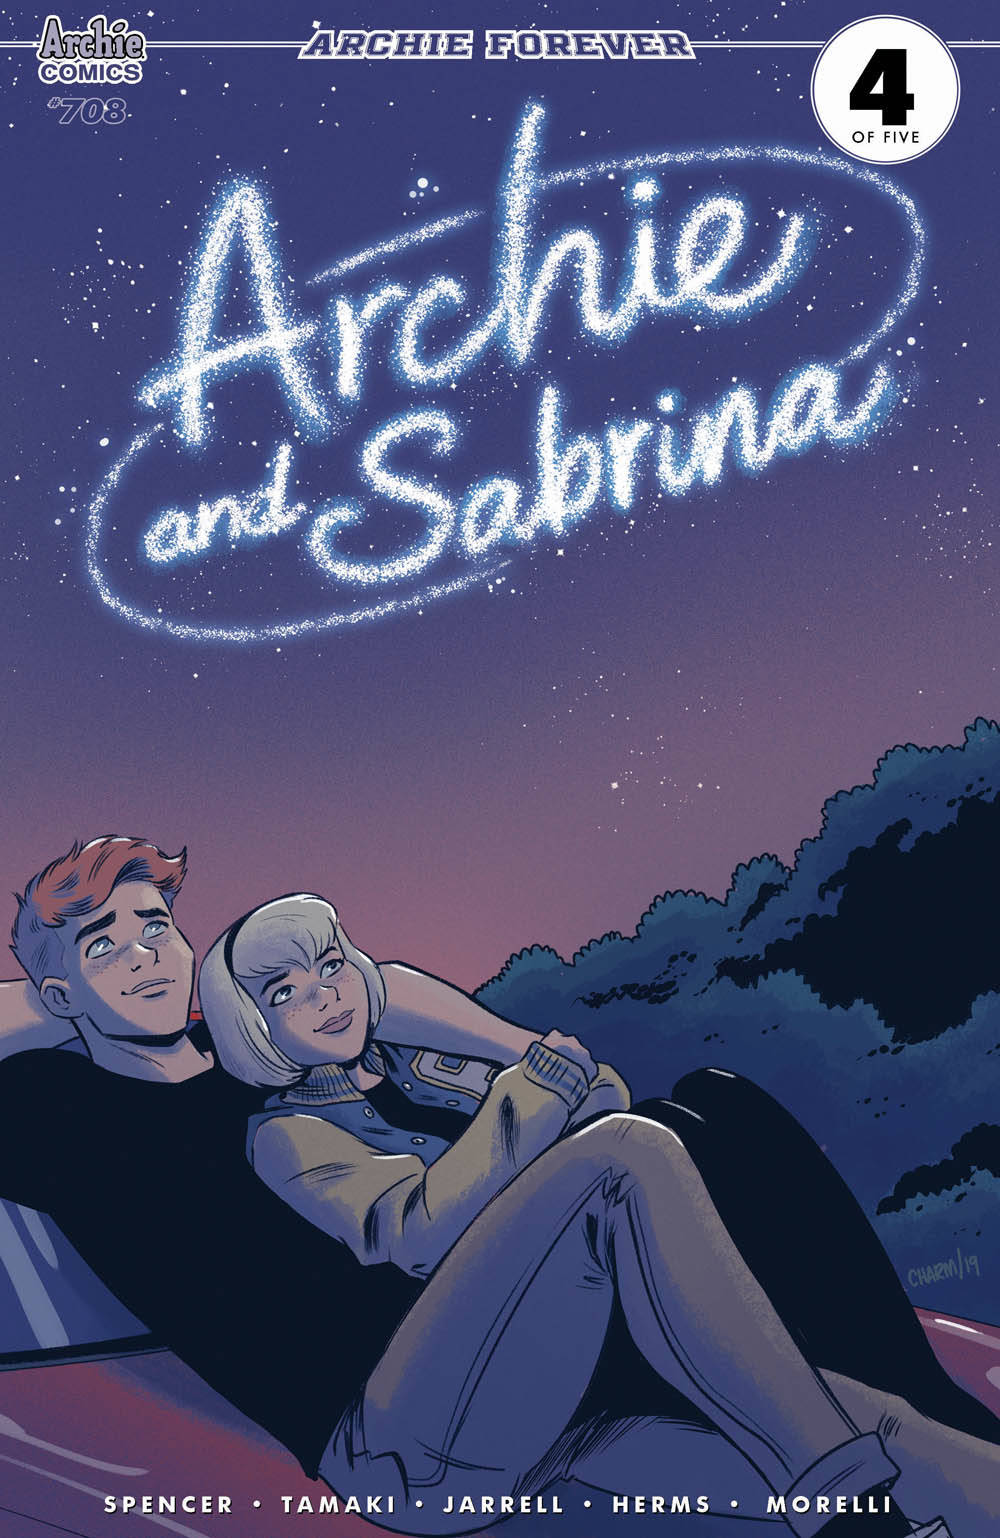 Archie #708 (Archie & Sabrina Part 4) Cover A Charm